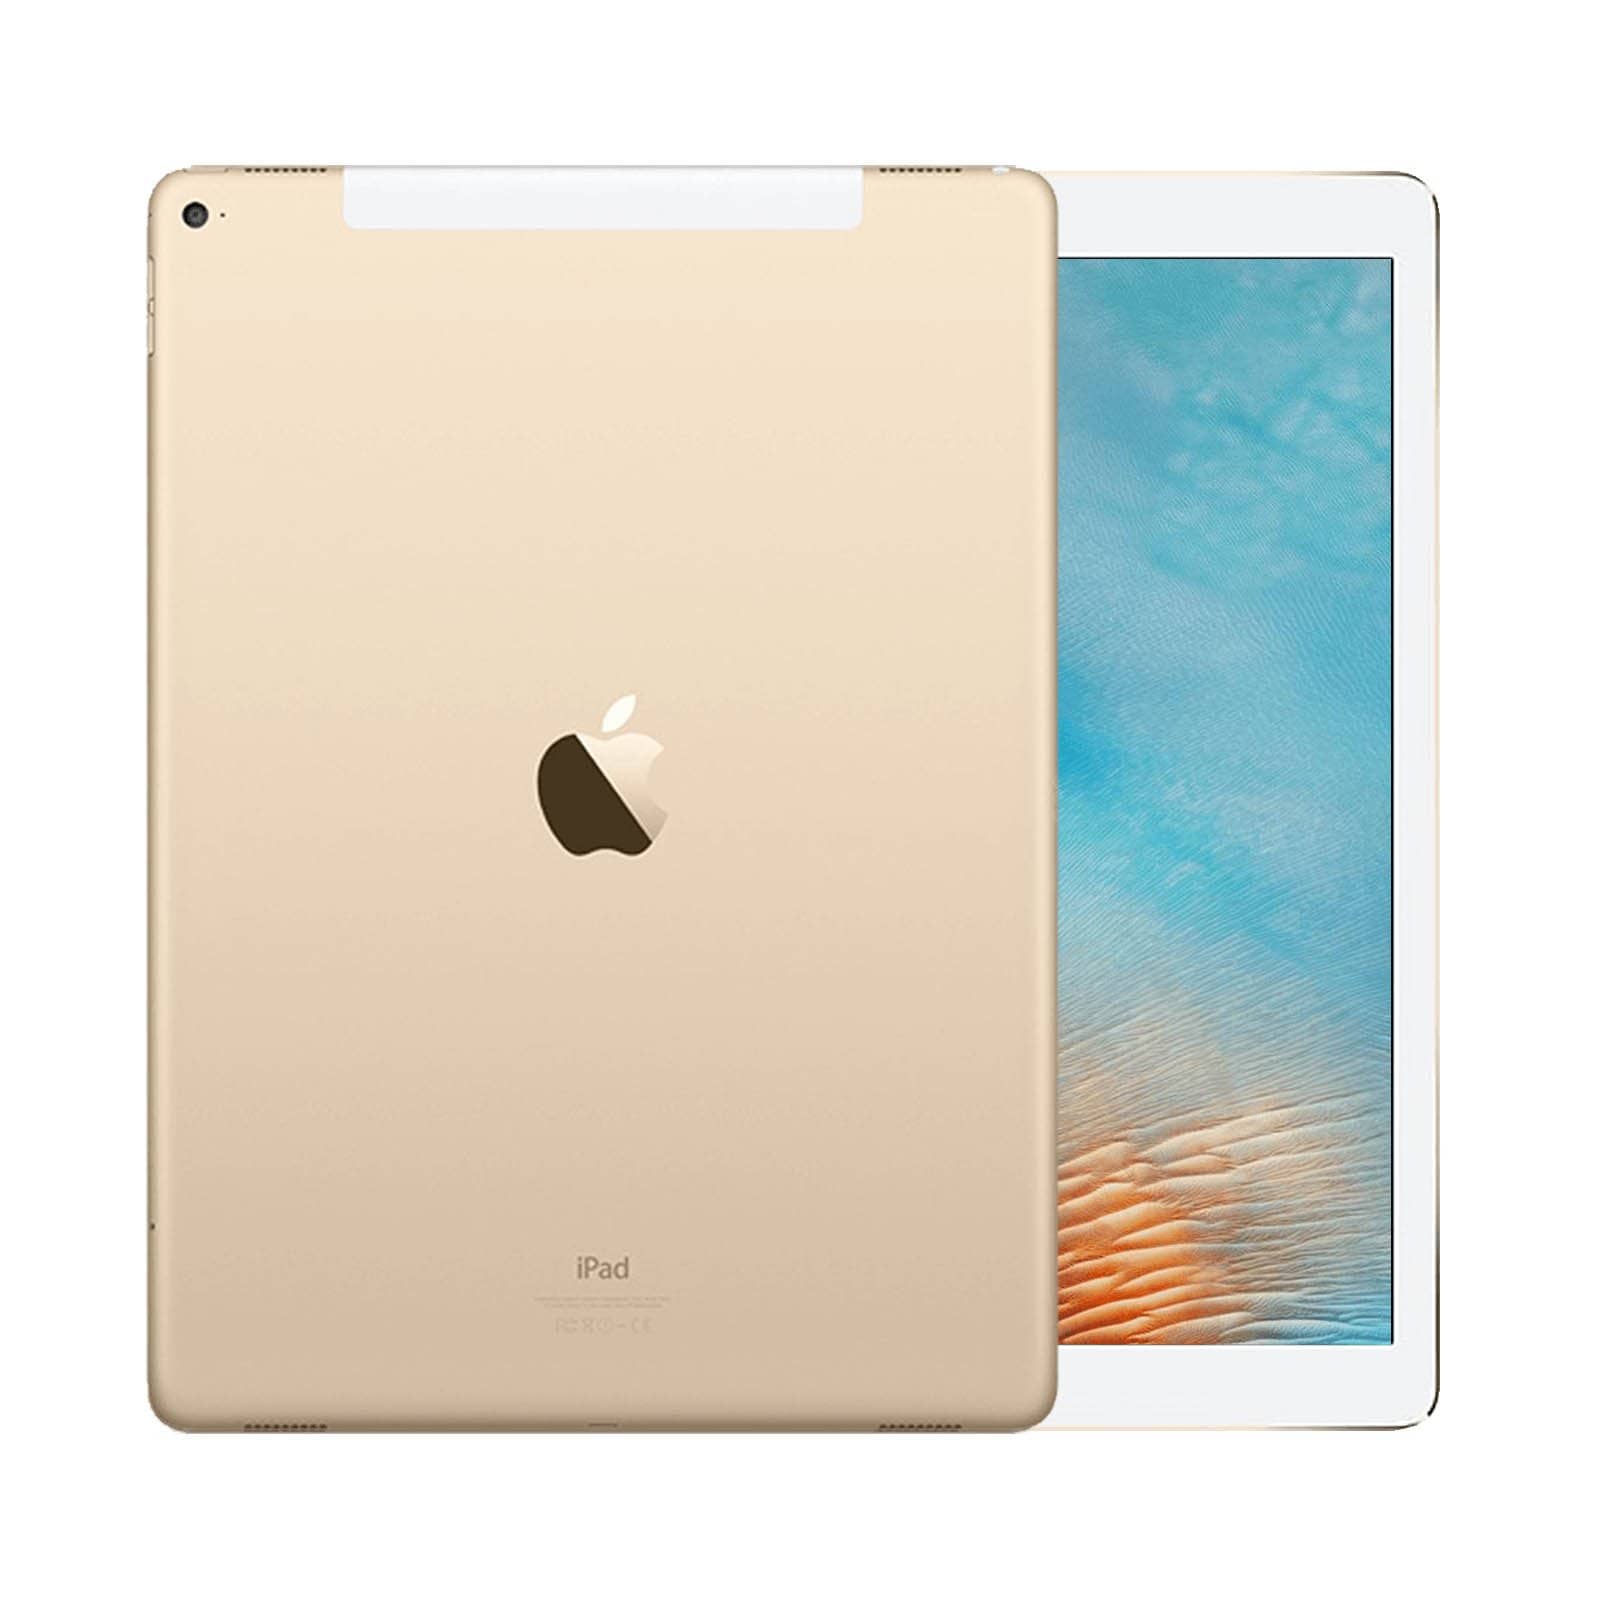 iPad Pro 12.9 Inch 2nd Gen 256GB Gold Good - Unlocked 256GB Gold Good